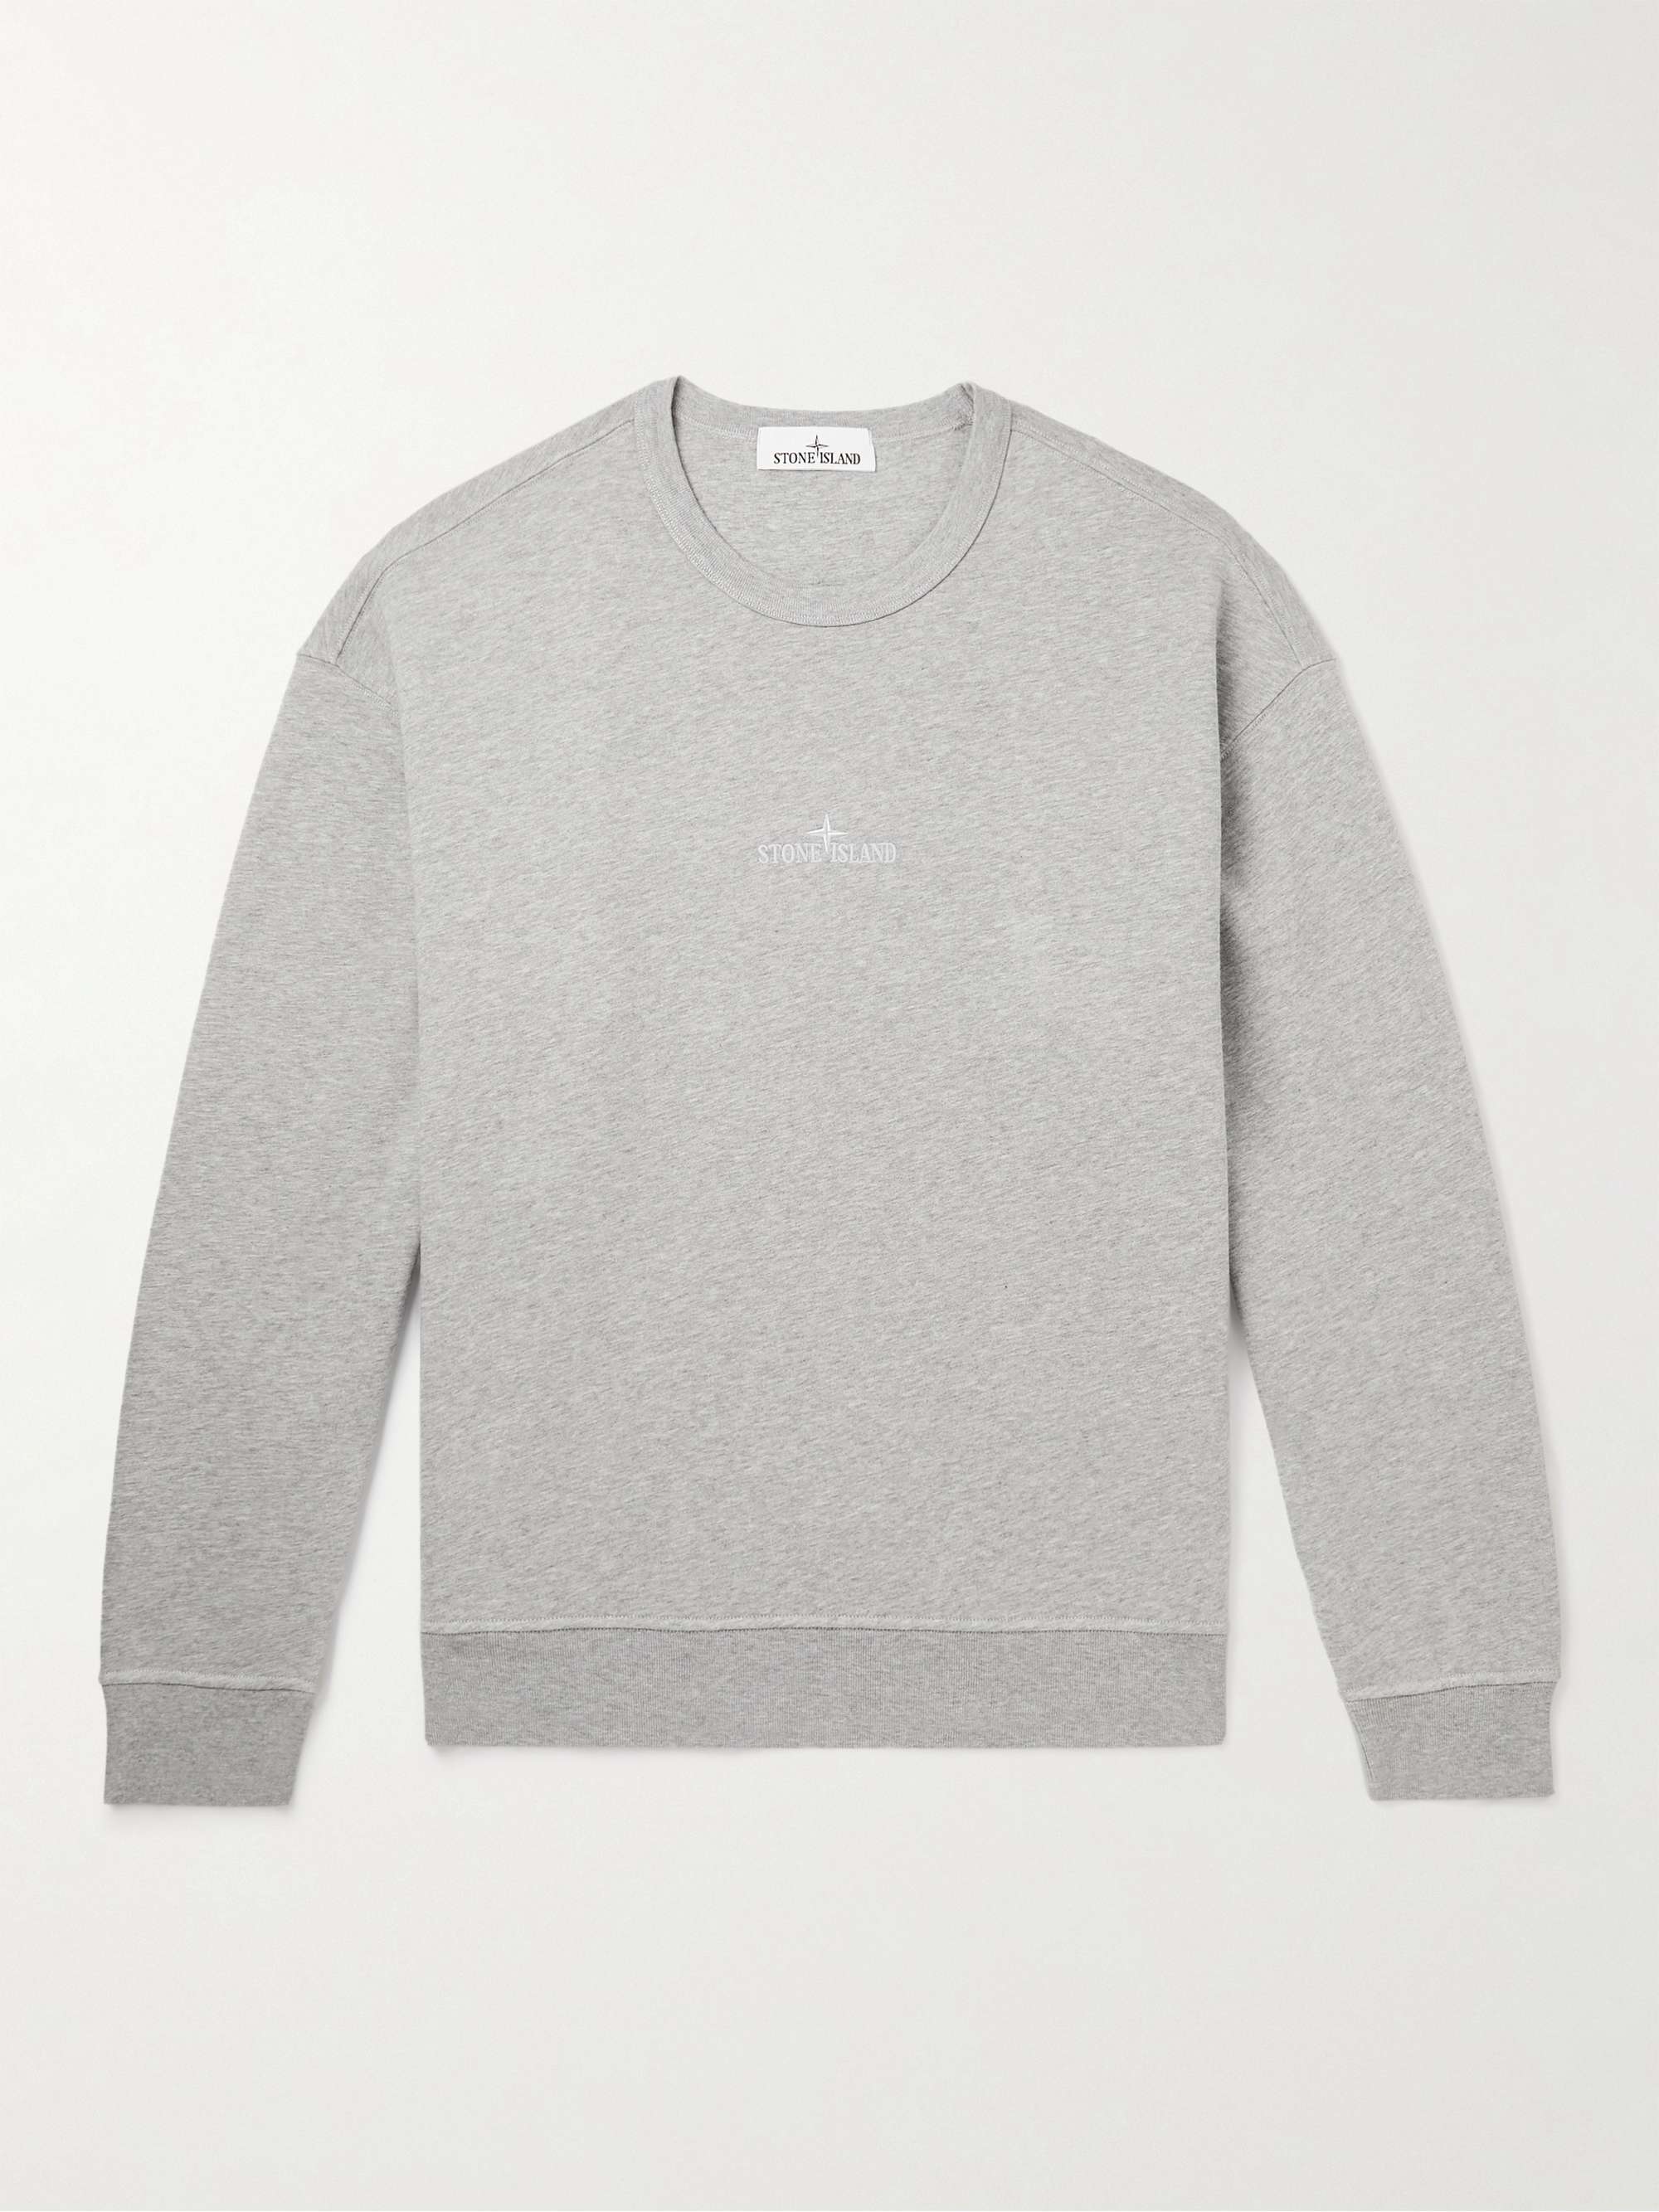 STONE ISLAND Logo-Embroidered Garment-Dyed Cotton-Jersey Sweatshirt for Men  | MR PORTER